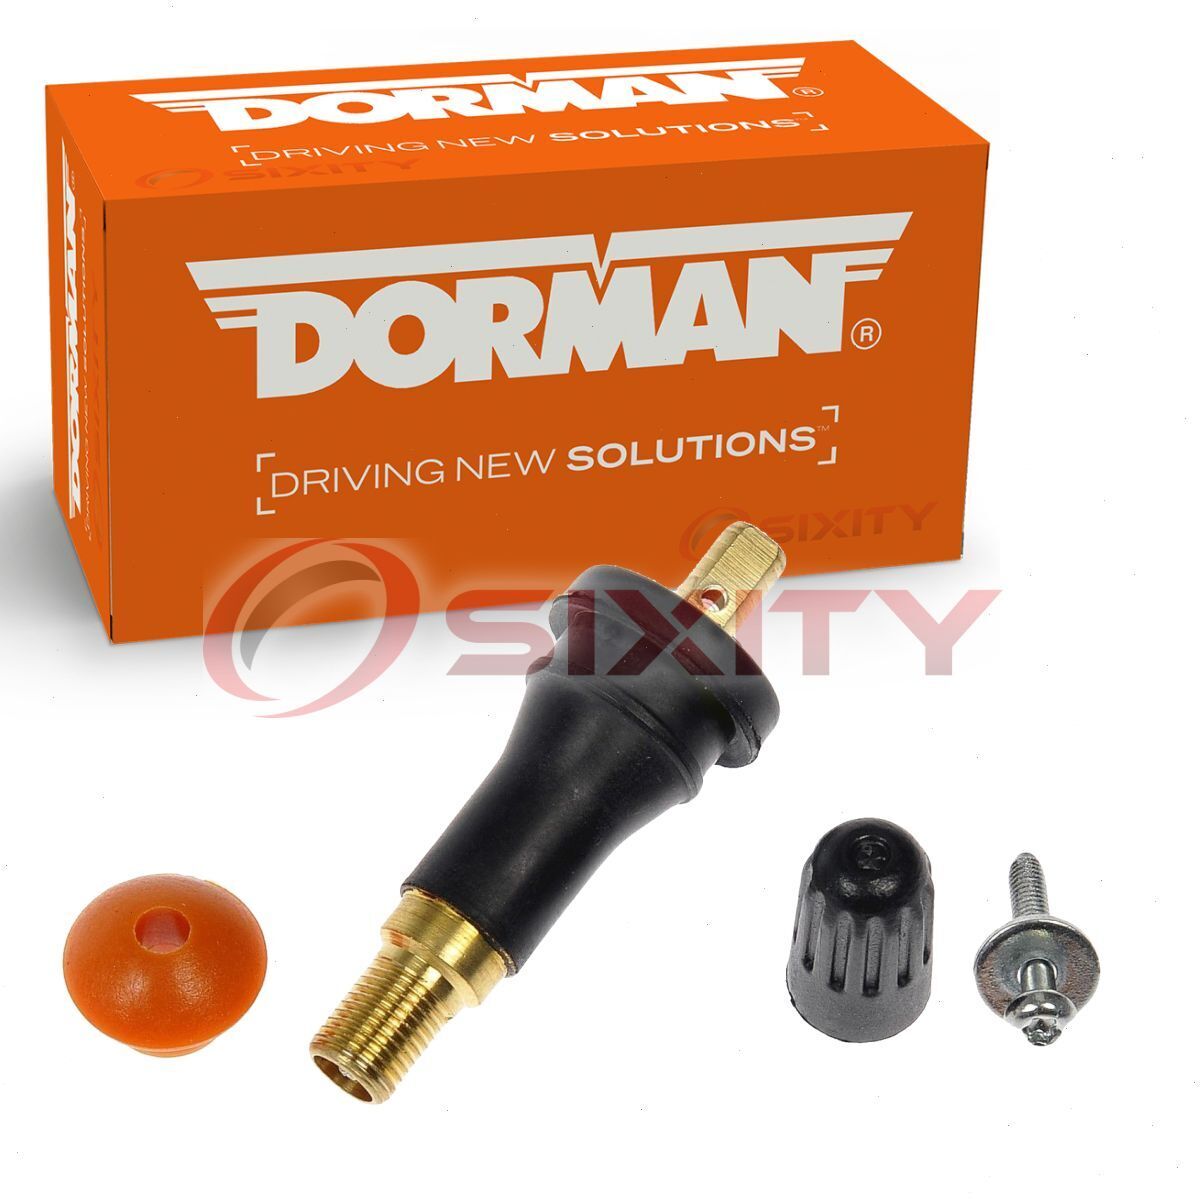 Dorman TPMS Valve Kit for 2000 BMW 323Ci Tire Pressure Monitoring System  kd